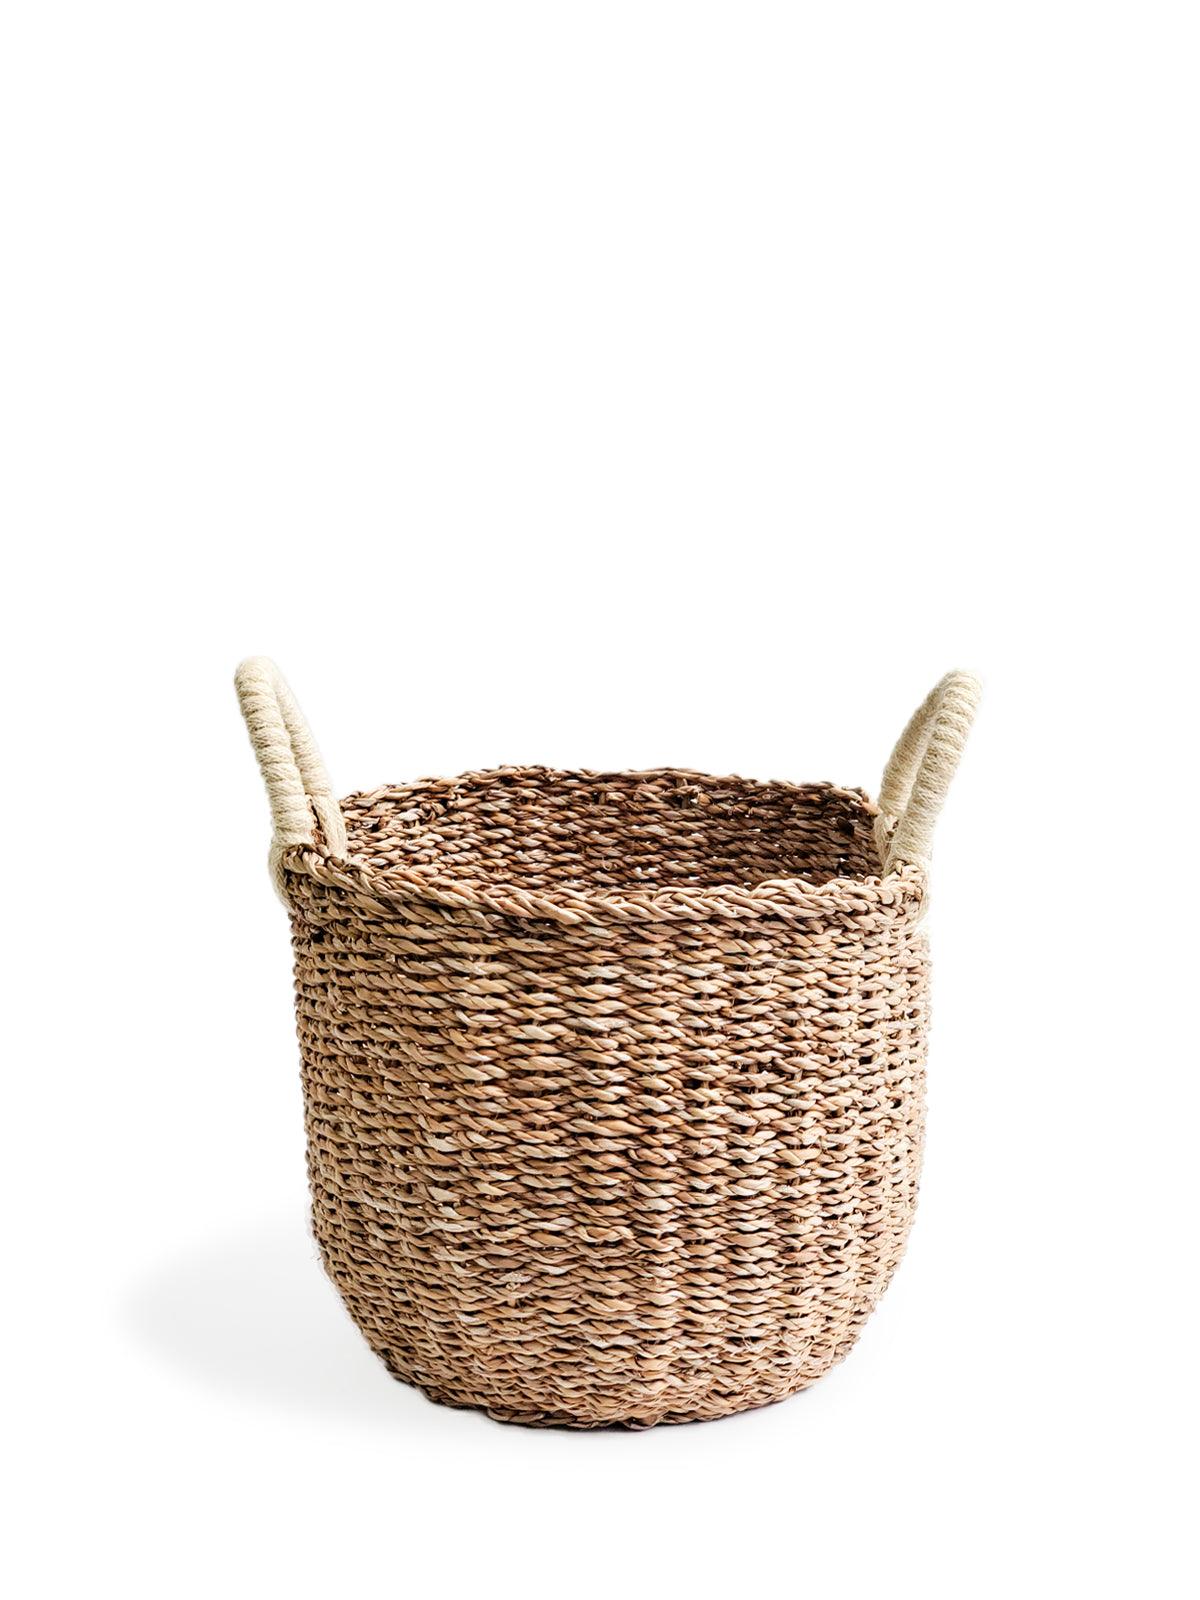 Savar Basket with White Handle - Plant Paradise Boutique